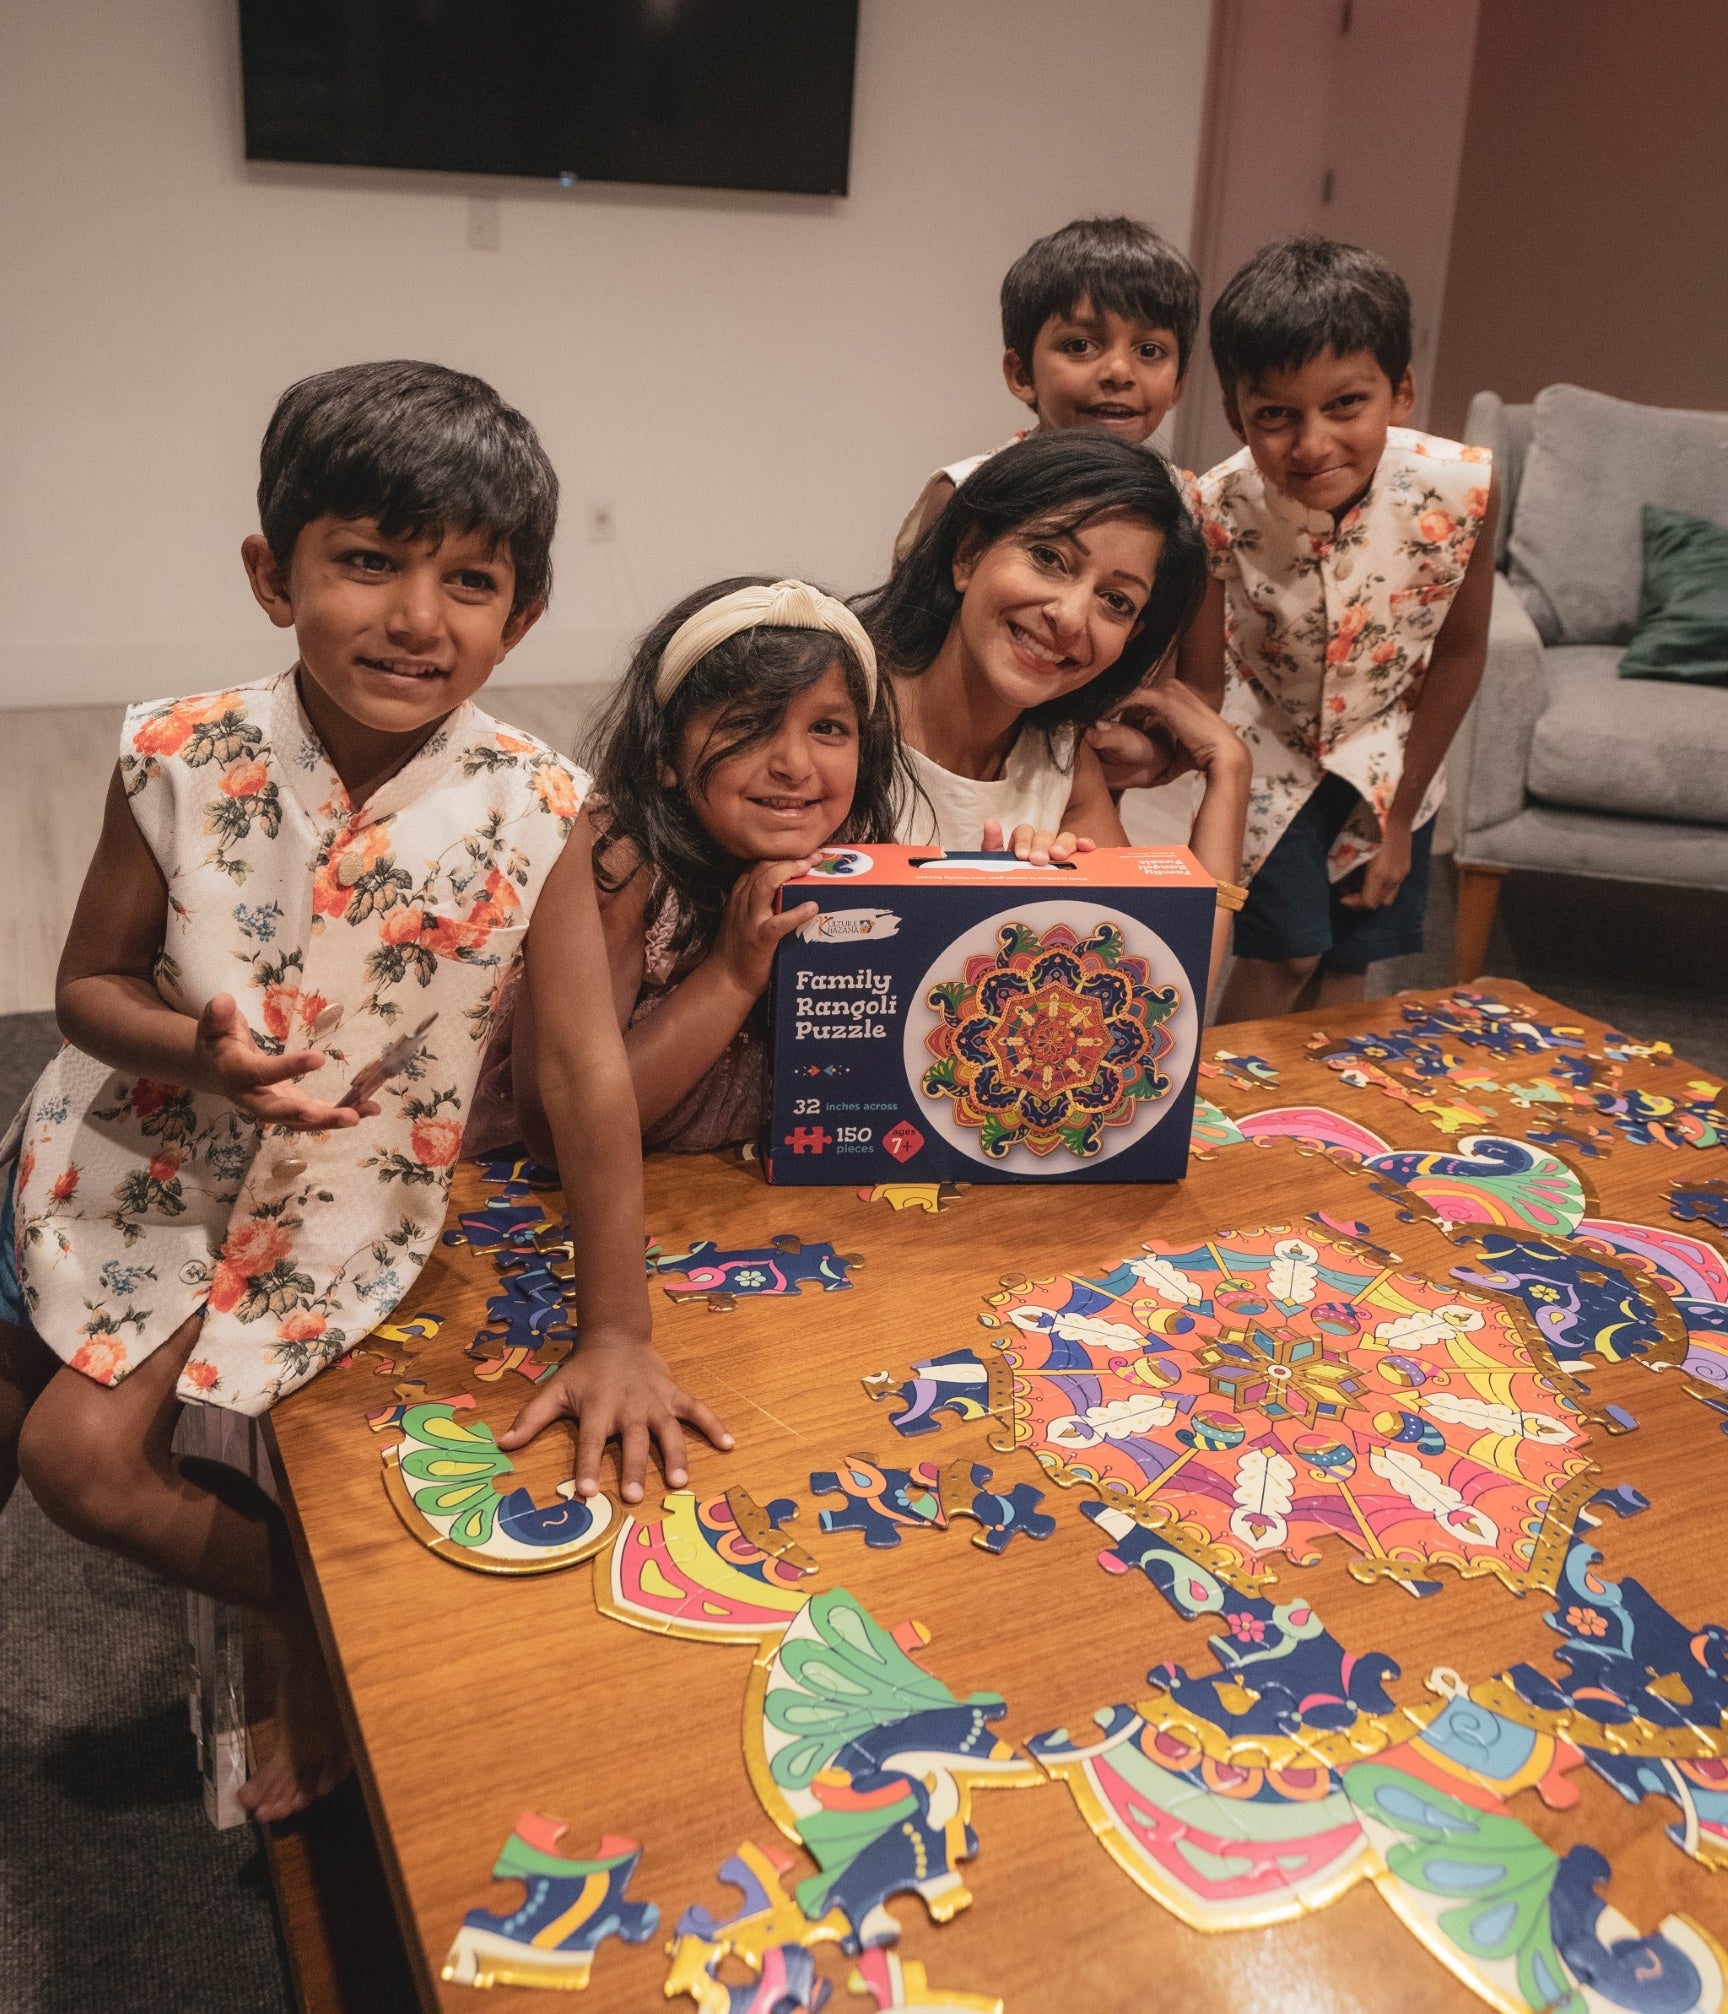 Family Rangoli Diwali Puzzle - 150 Piece, Kulture Khazana, 32 Across,  Tabletop Puzzle, Holi, Indian Culture, Ages 7+ 